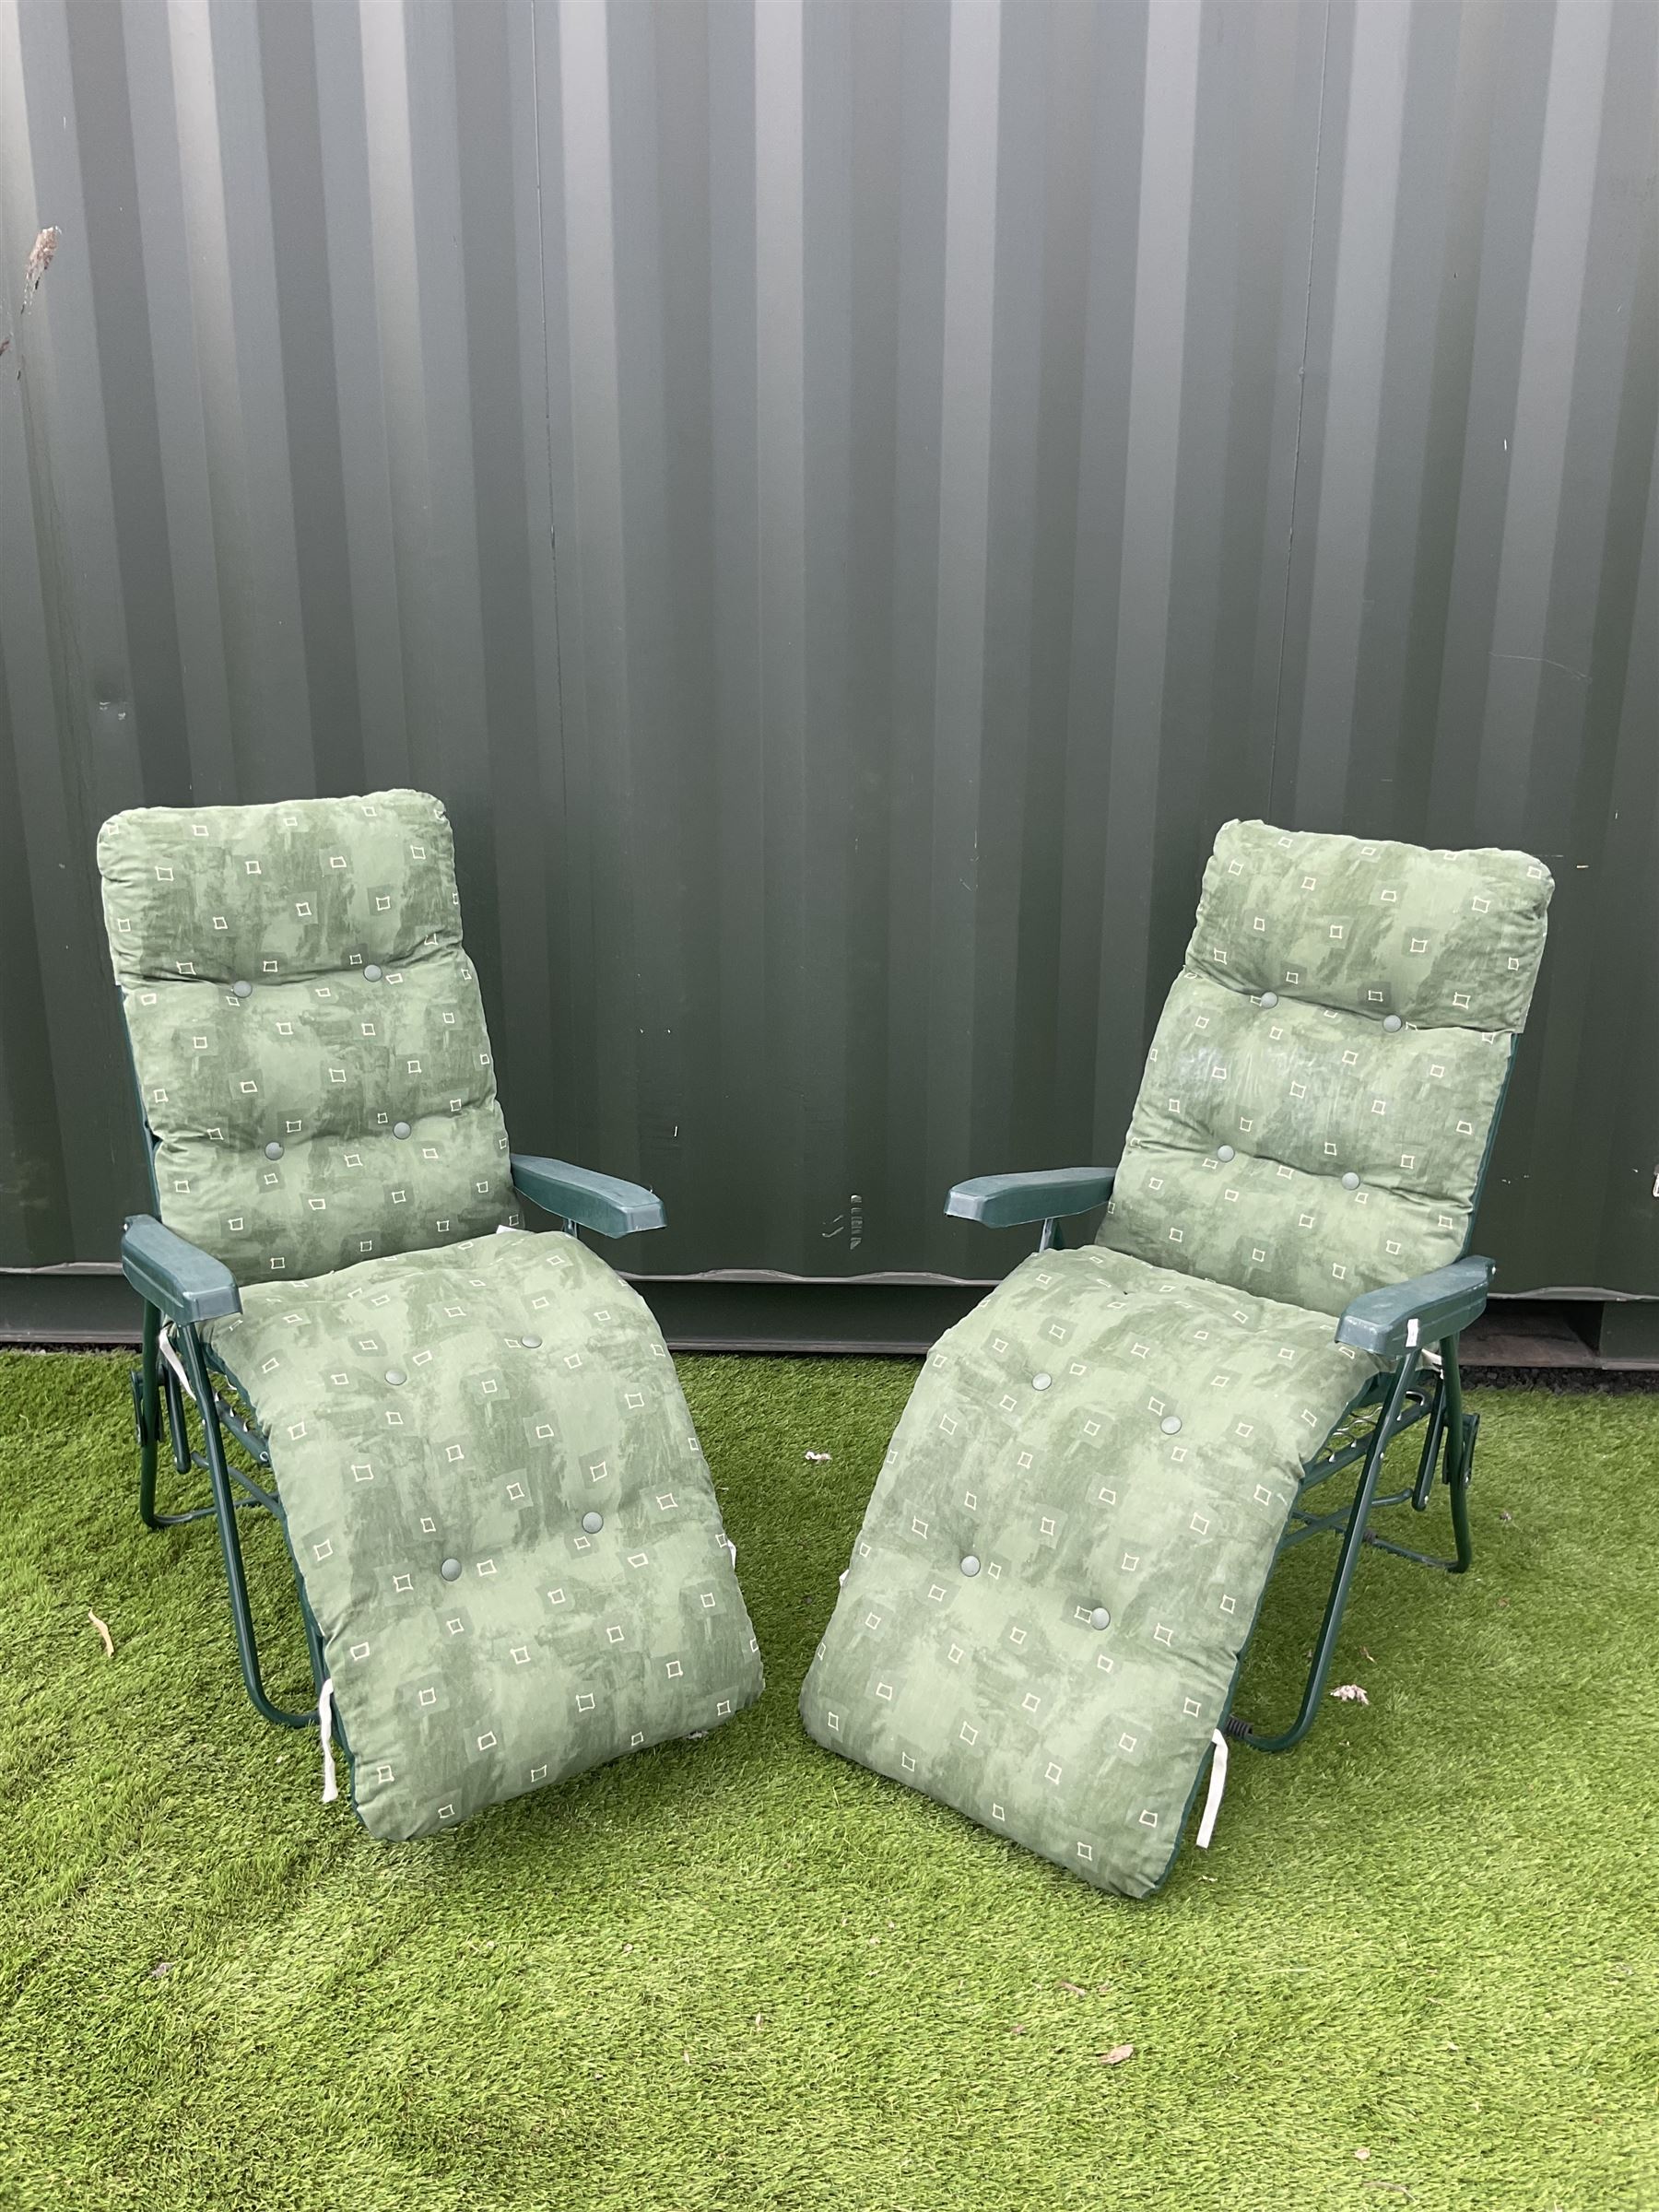 Pair of metal garden relaxer chairs